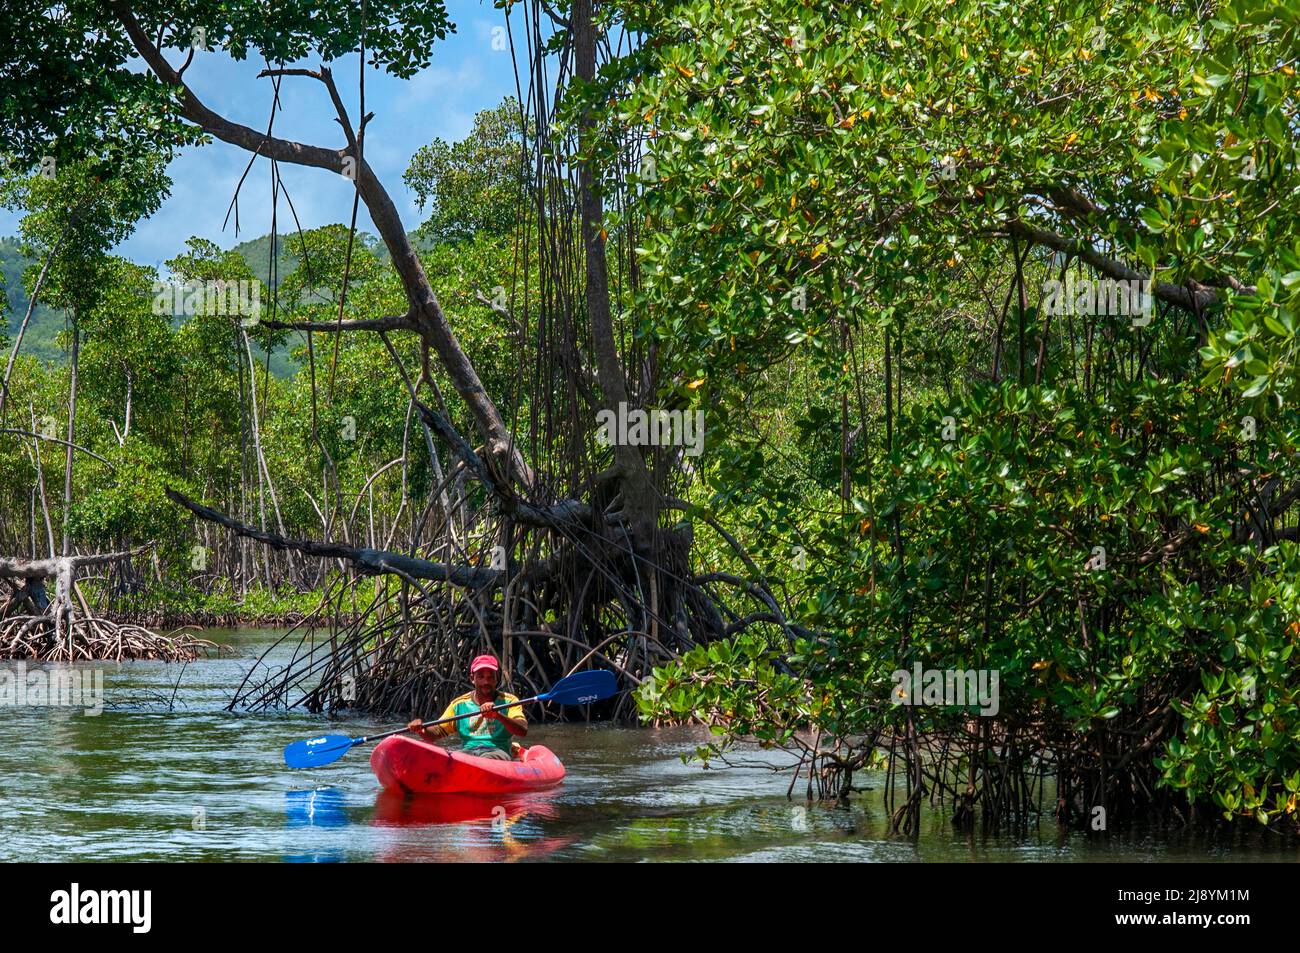 Kajakfahren im Regenwald, Mangroves. Ökotourismus. Nationalpark Los Haitises, Sabana de La Mar, Dominikanische Republik. Los Haitises National Park ist ein Stockfoto